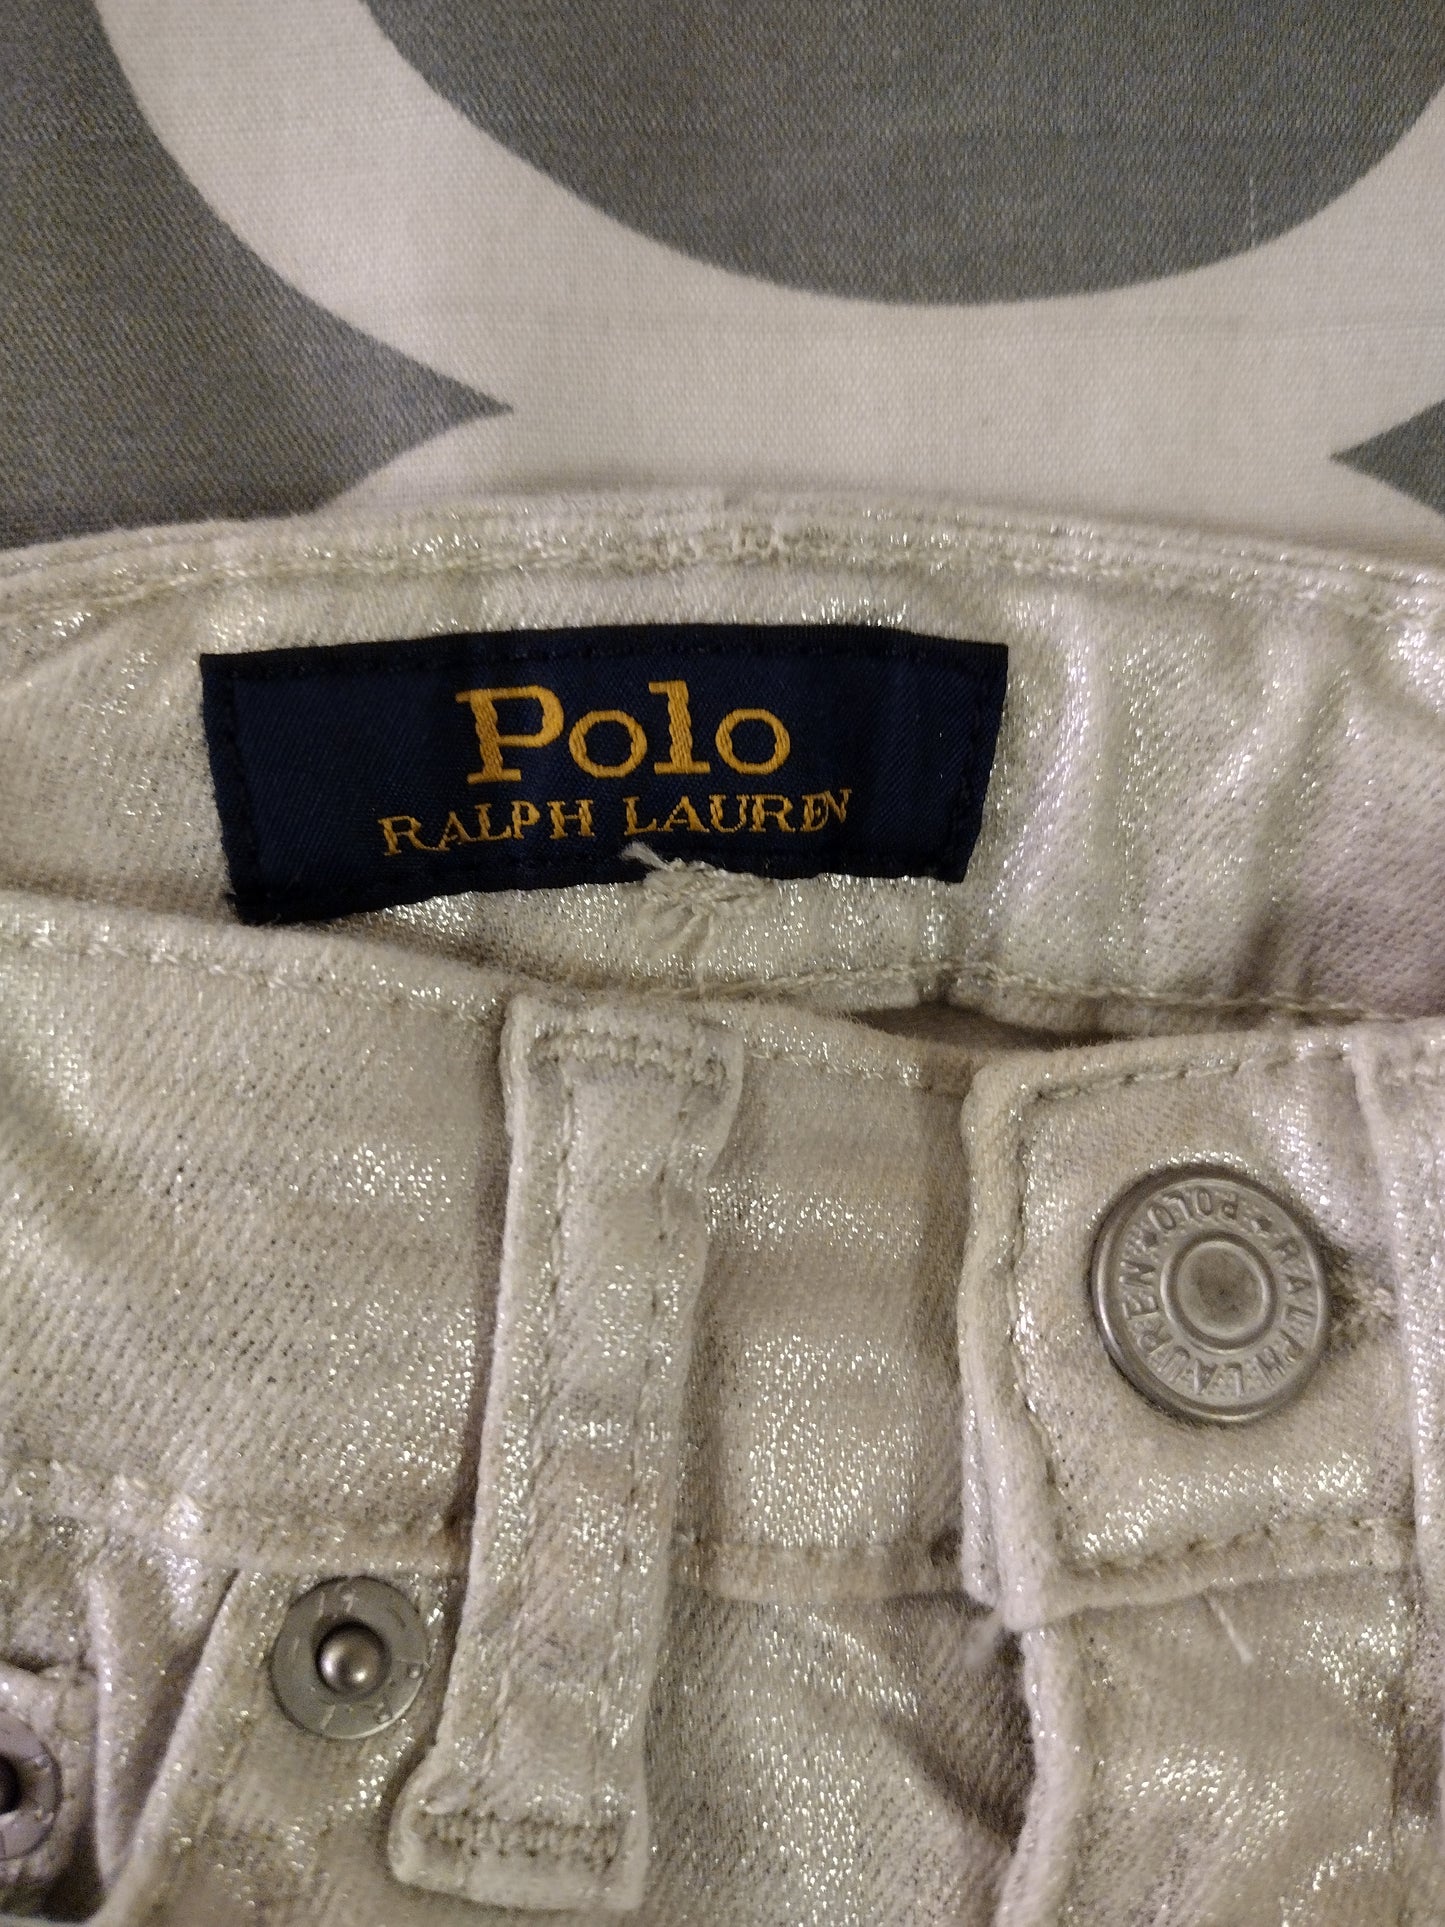 Polo Ralph Lauren kids jeans